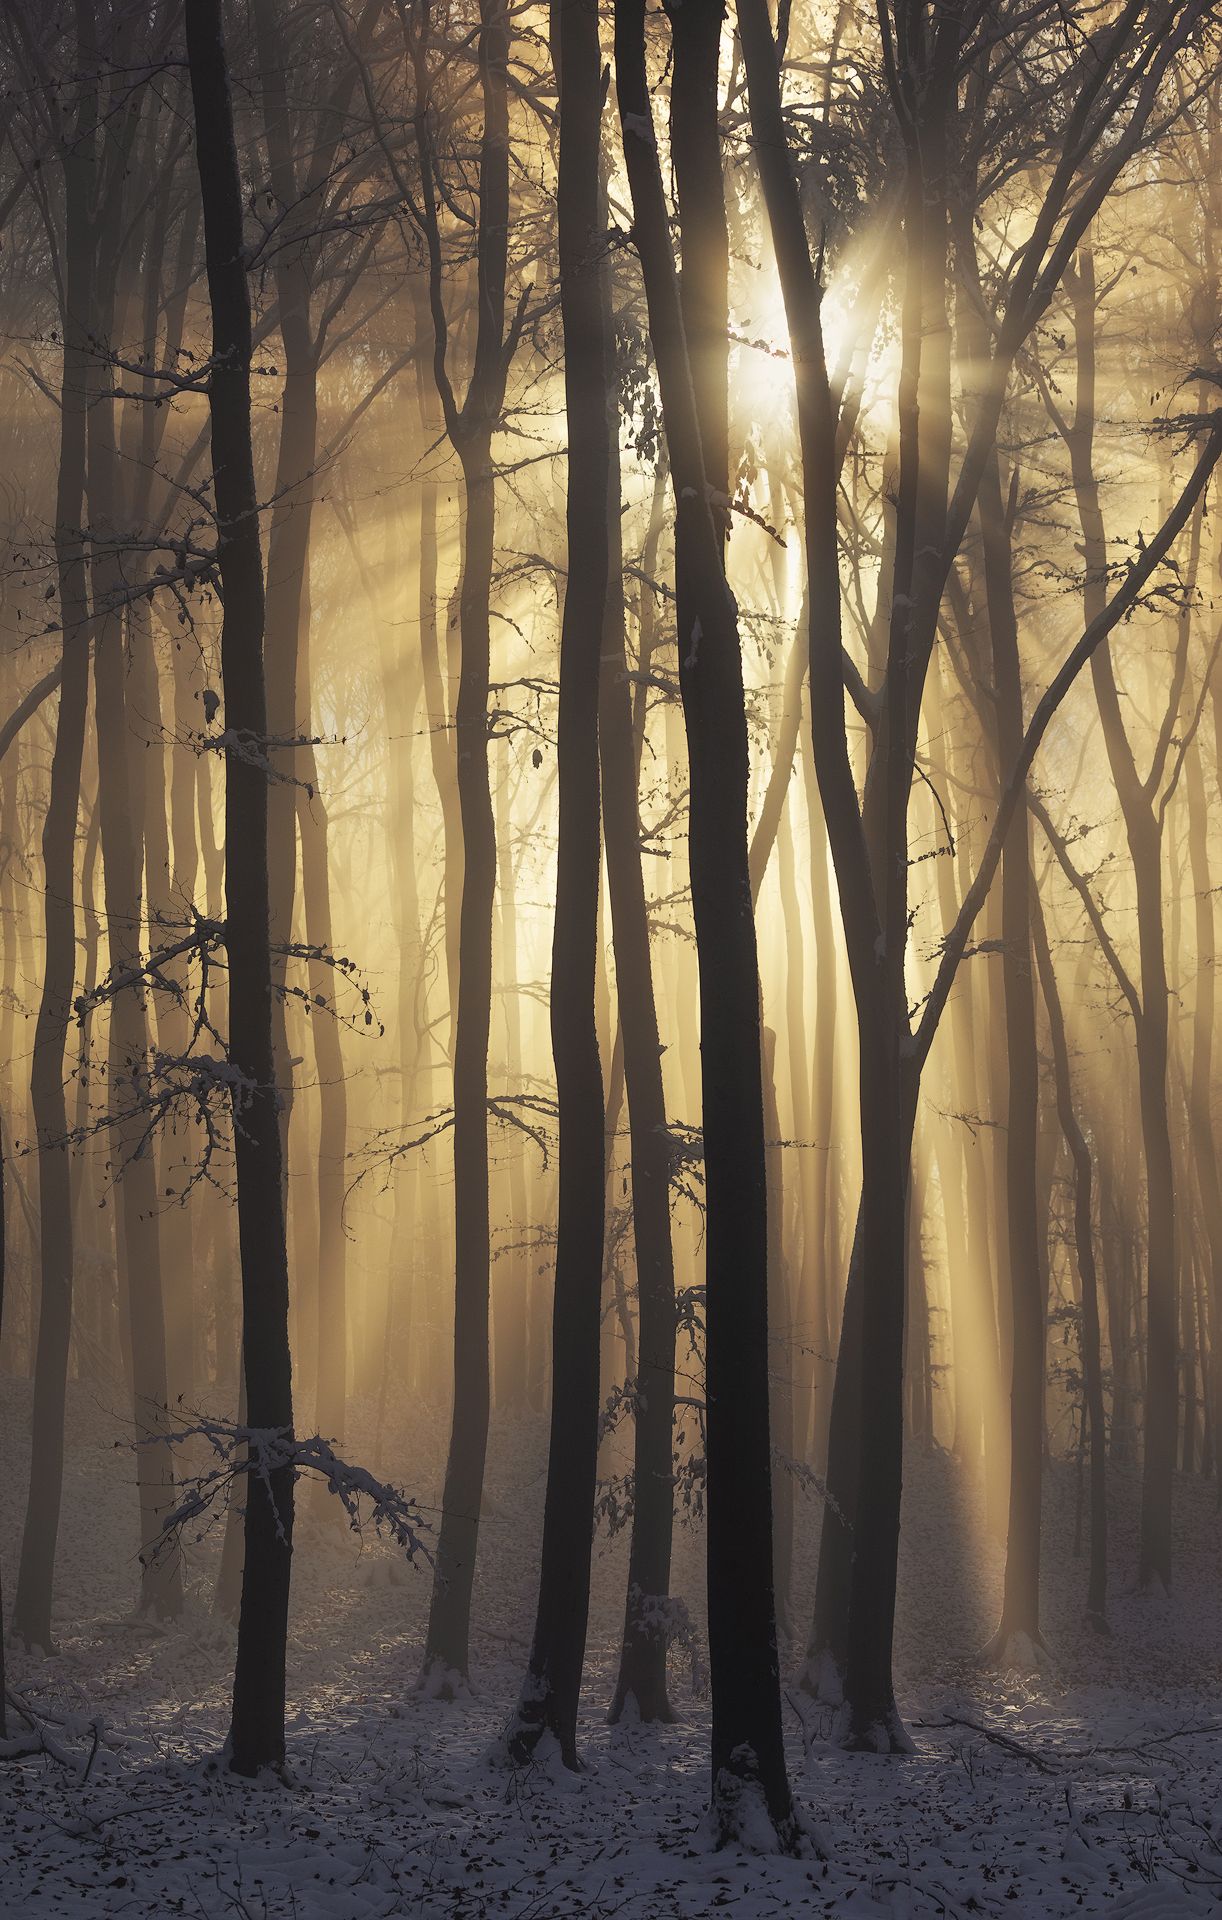 #forest #trees #mist #light #rays #fog #morning #winter #snow #misty #cold #hills #romania, Lazar Ioan Ovidiu